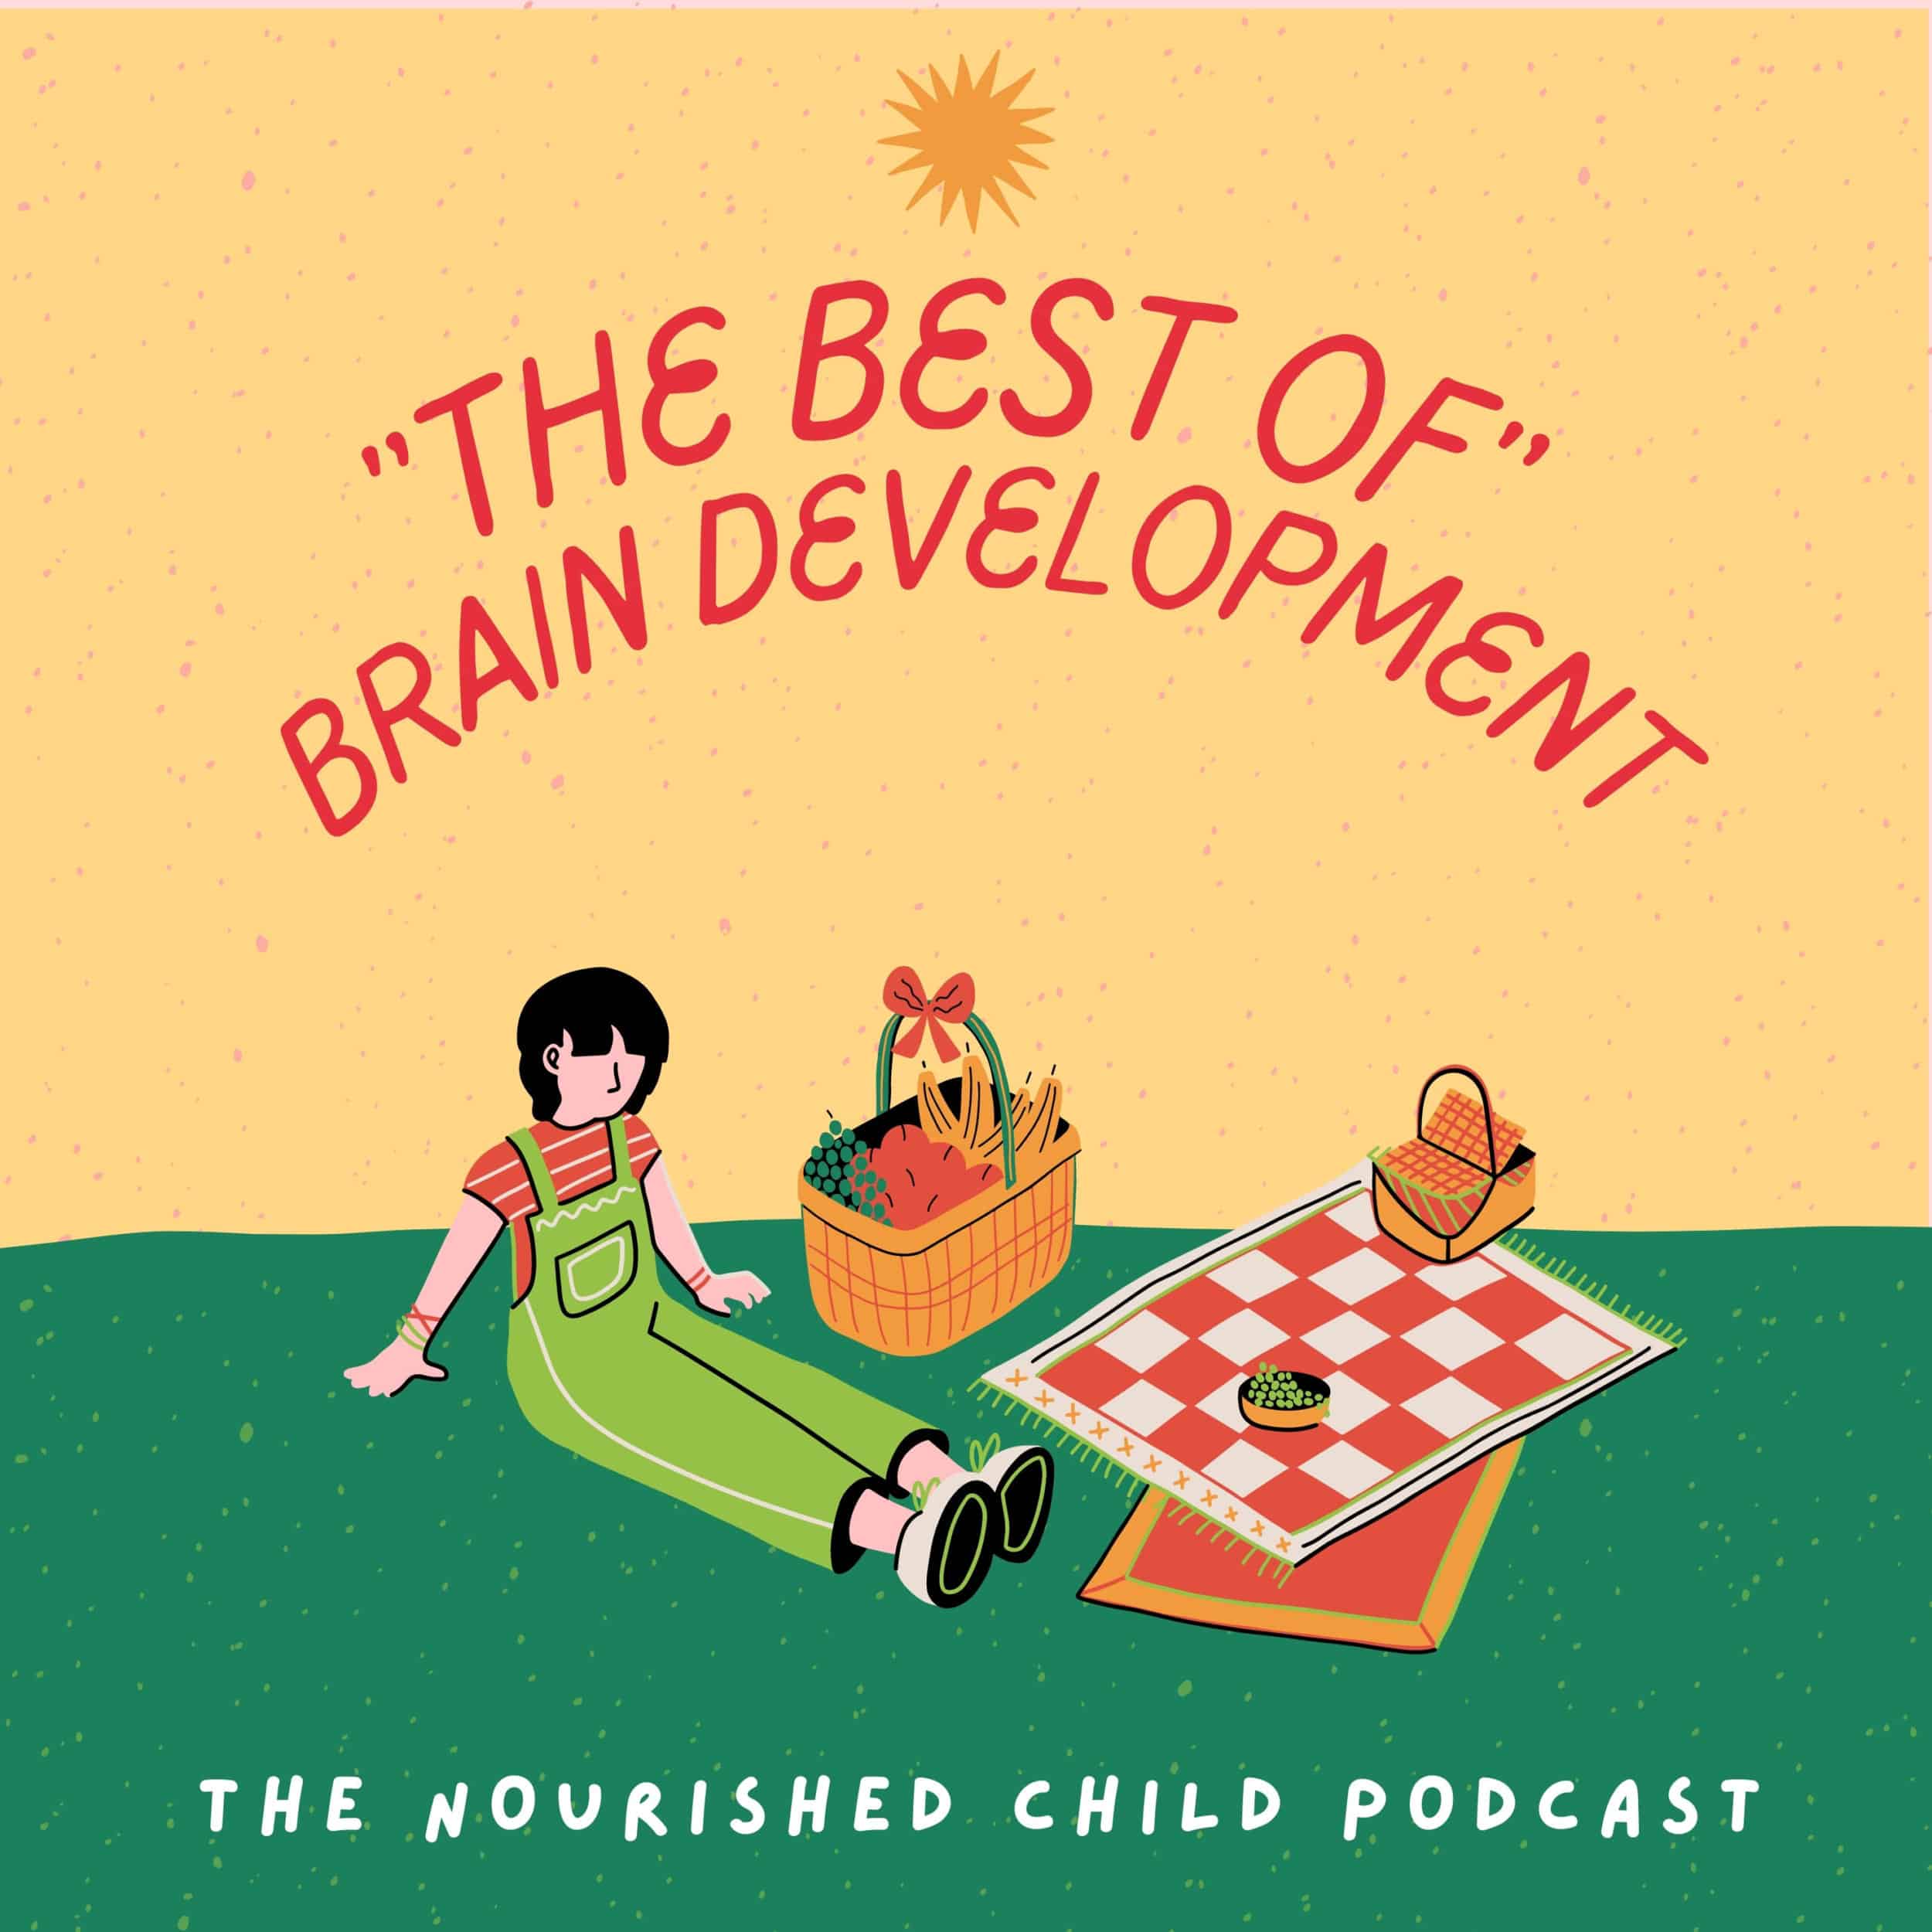 Brain development on the nourished child